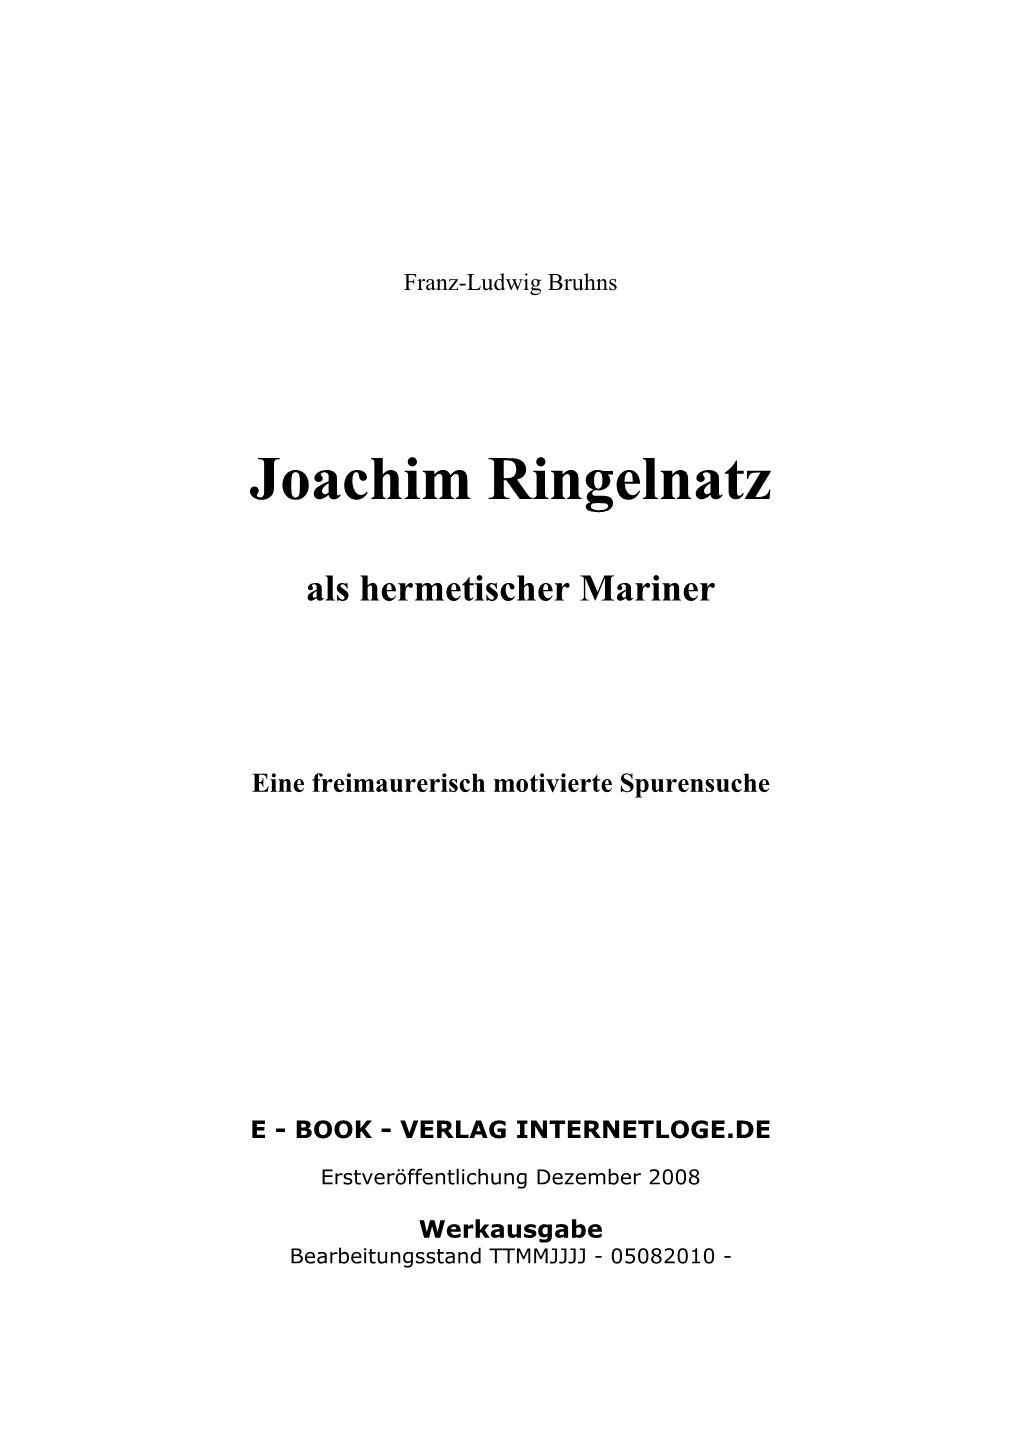 Joachim Ringelnatz